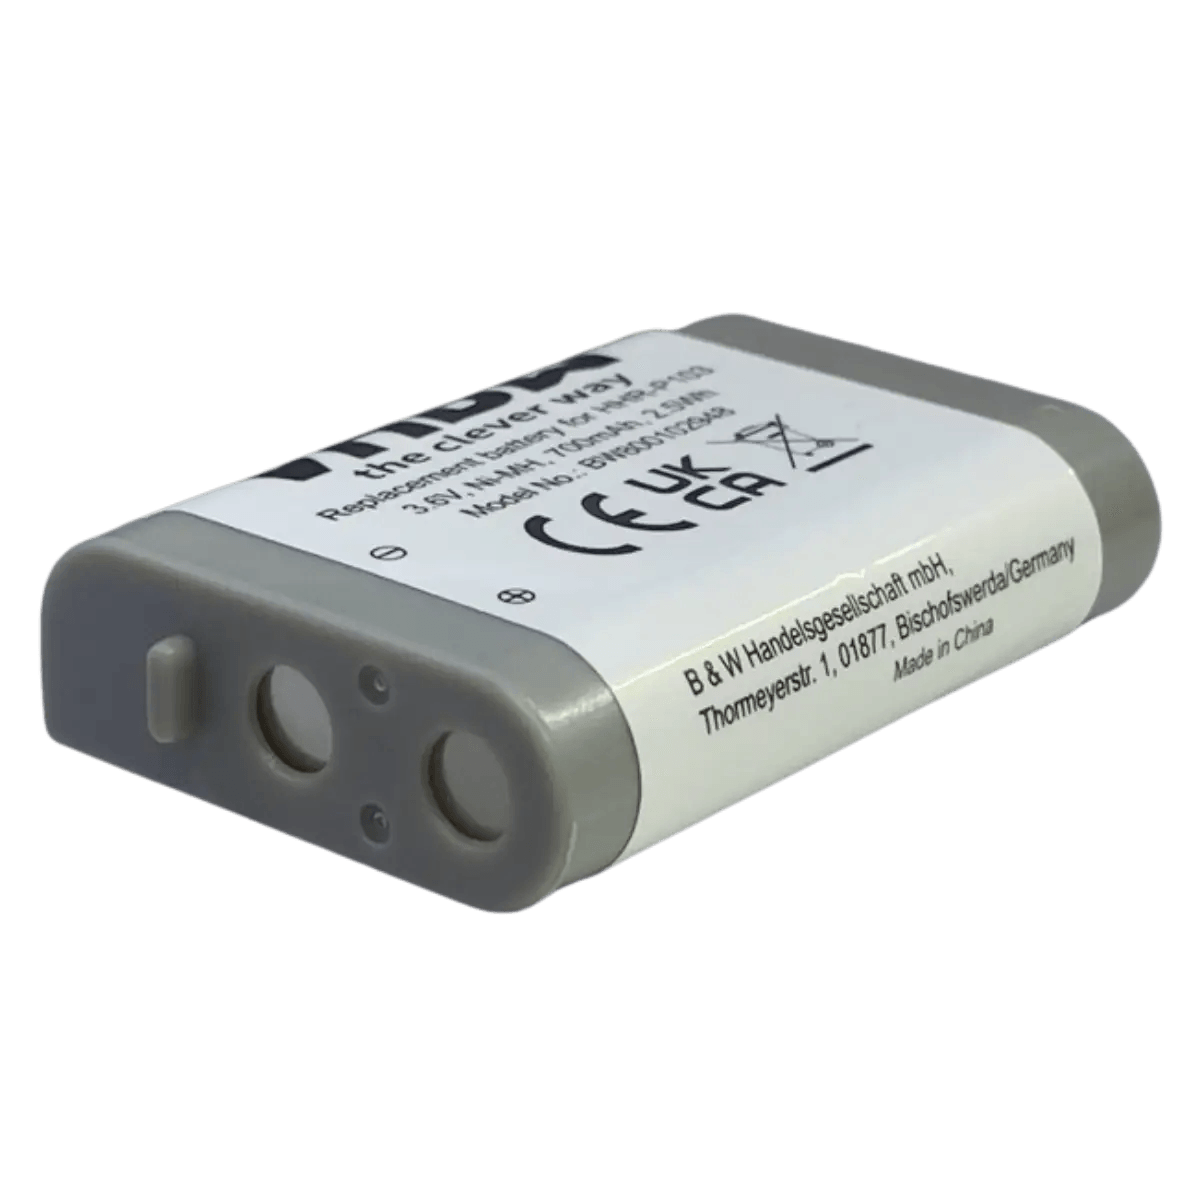 Batterie compatible HHR-P103 Ni-Mh 3.6V 700mAh